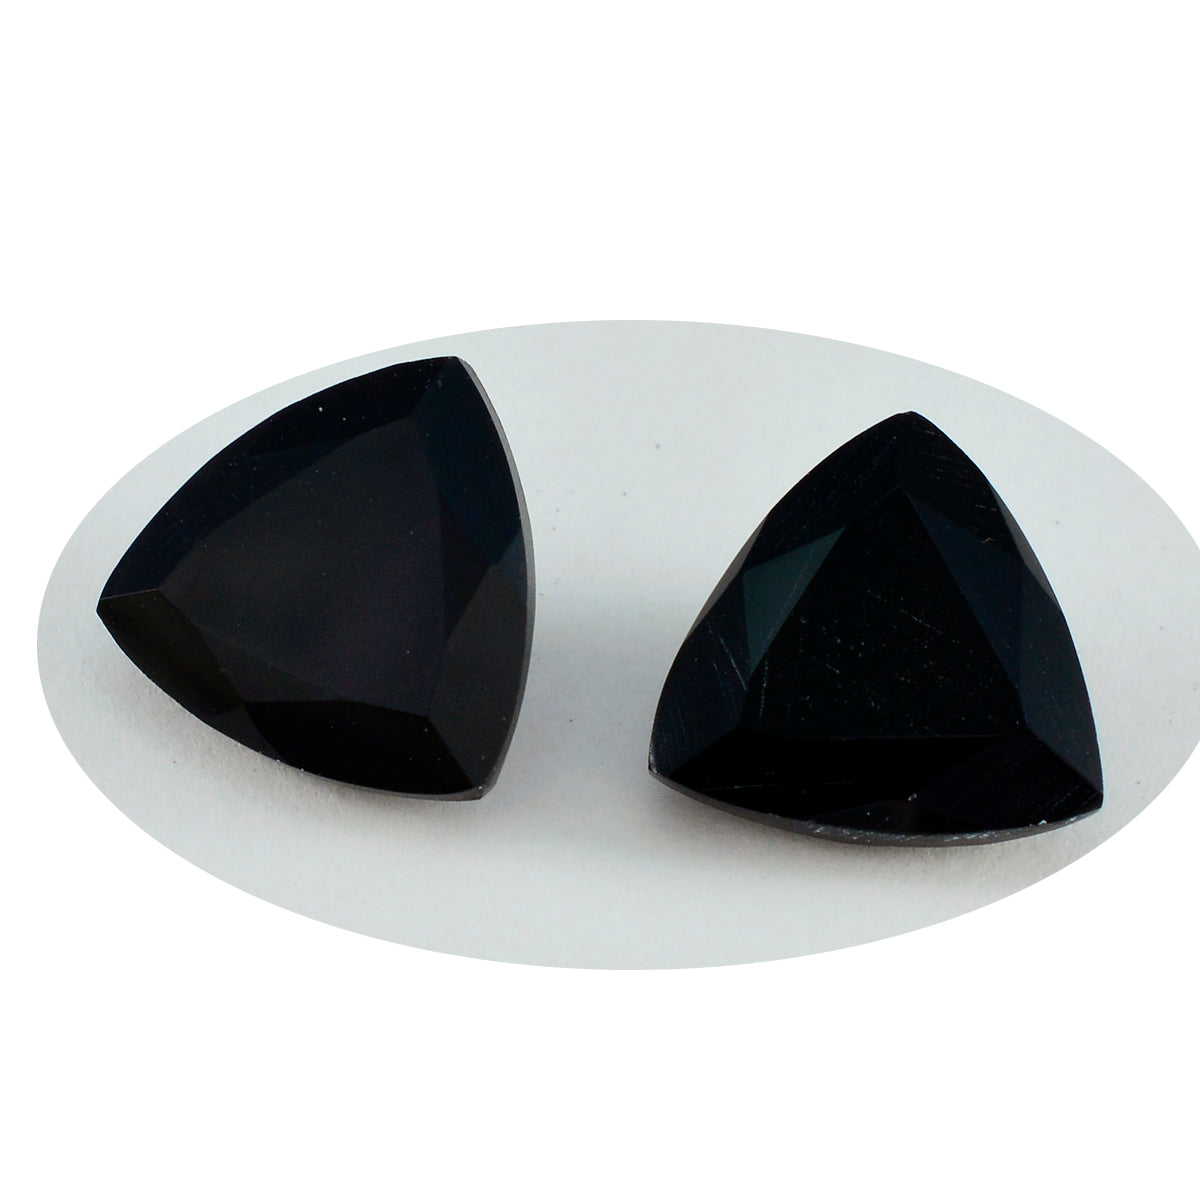 Riyogems 1PC Genuine Black Onyx Faceted 15x15 mm Trillion Shape excellent Quality Stone